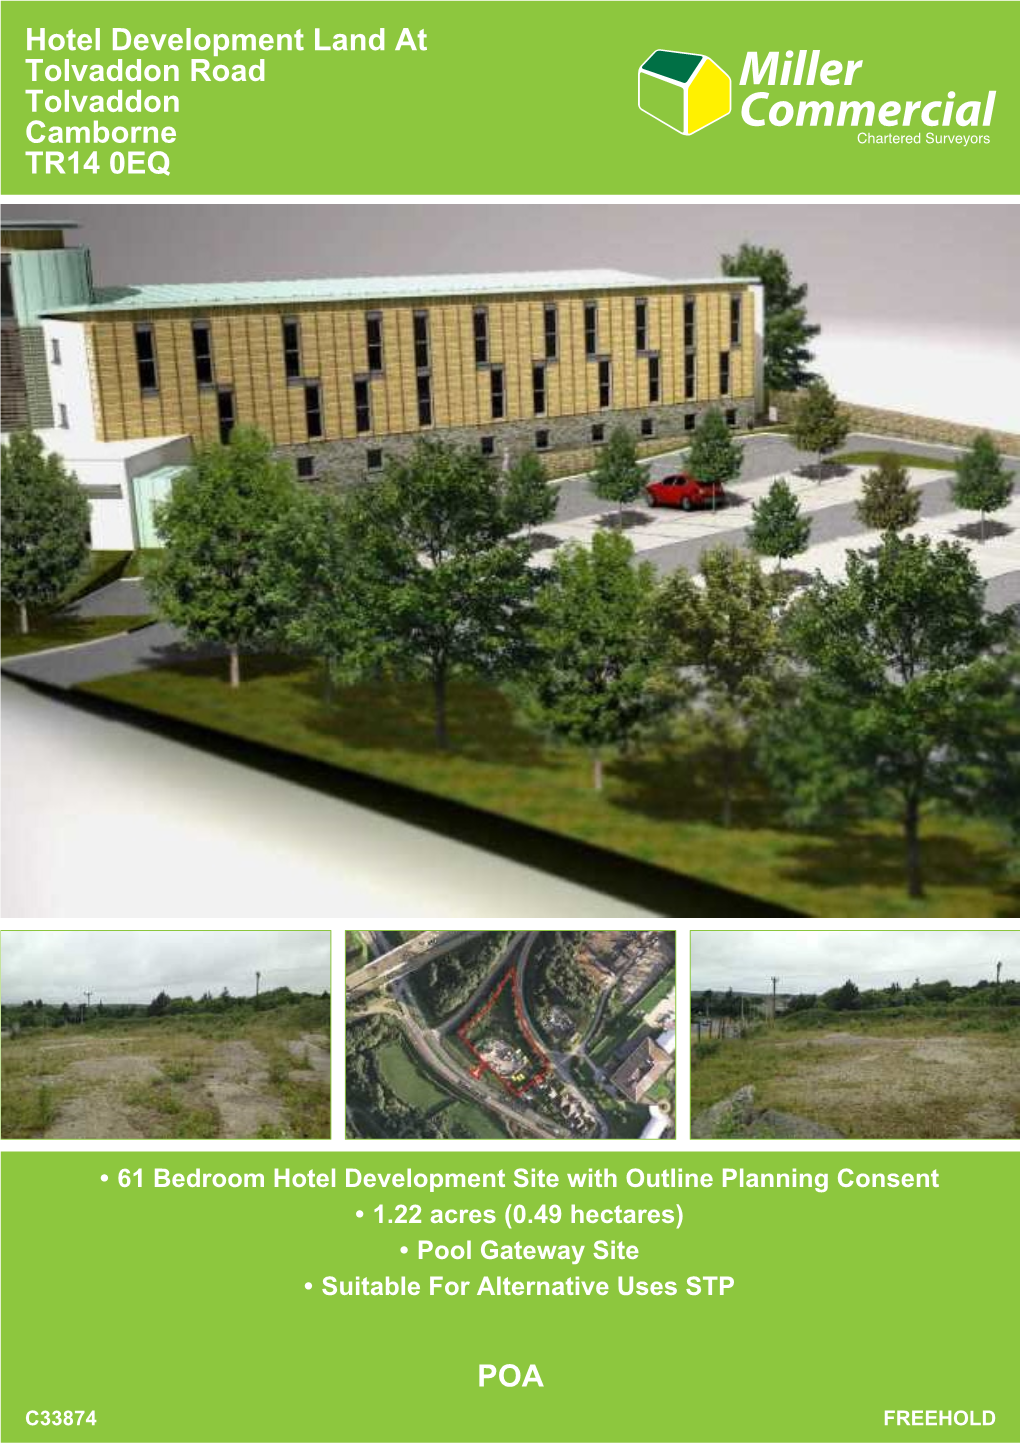 Hotel Development Land at Tolvaddon Road Tolvaddon Camborne TR14 0EQ